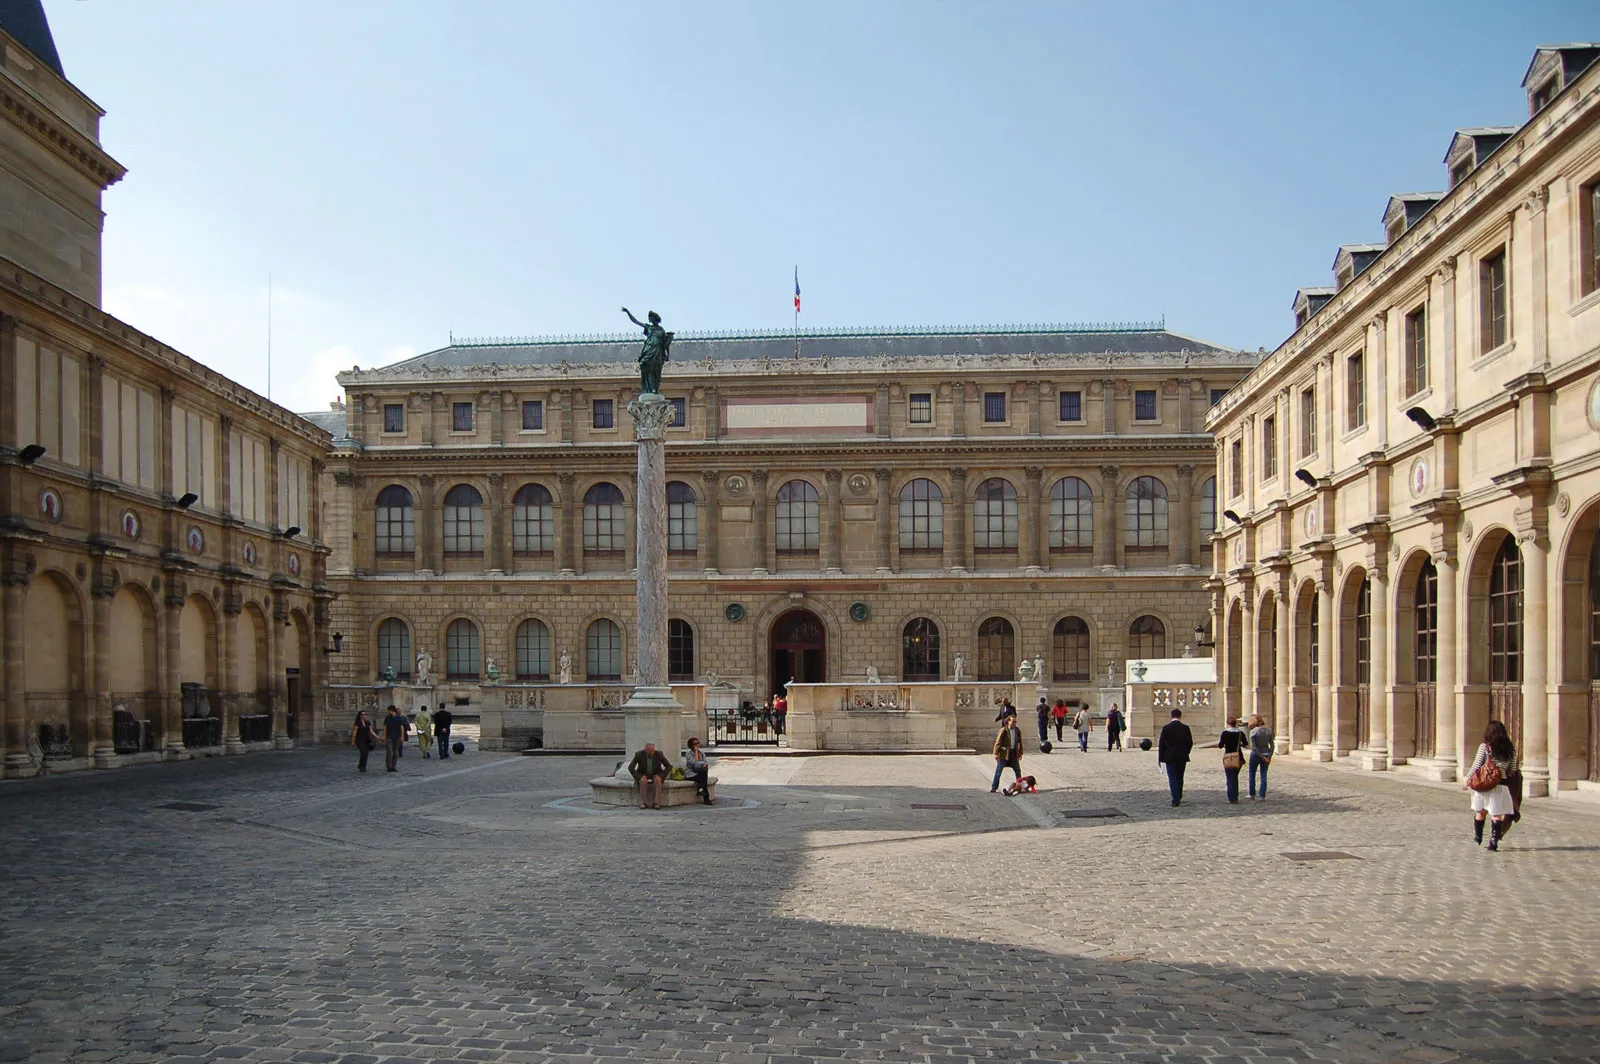 Take a look into the Paris School of Decorative Arts